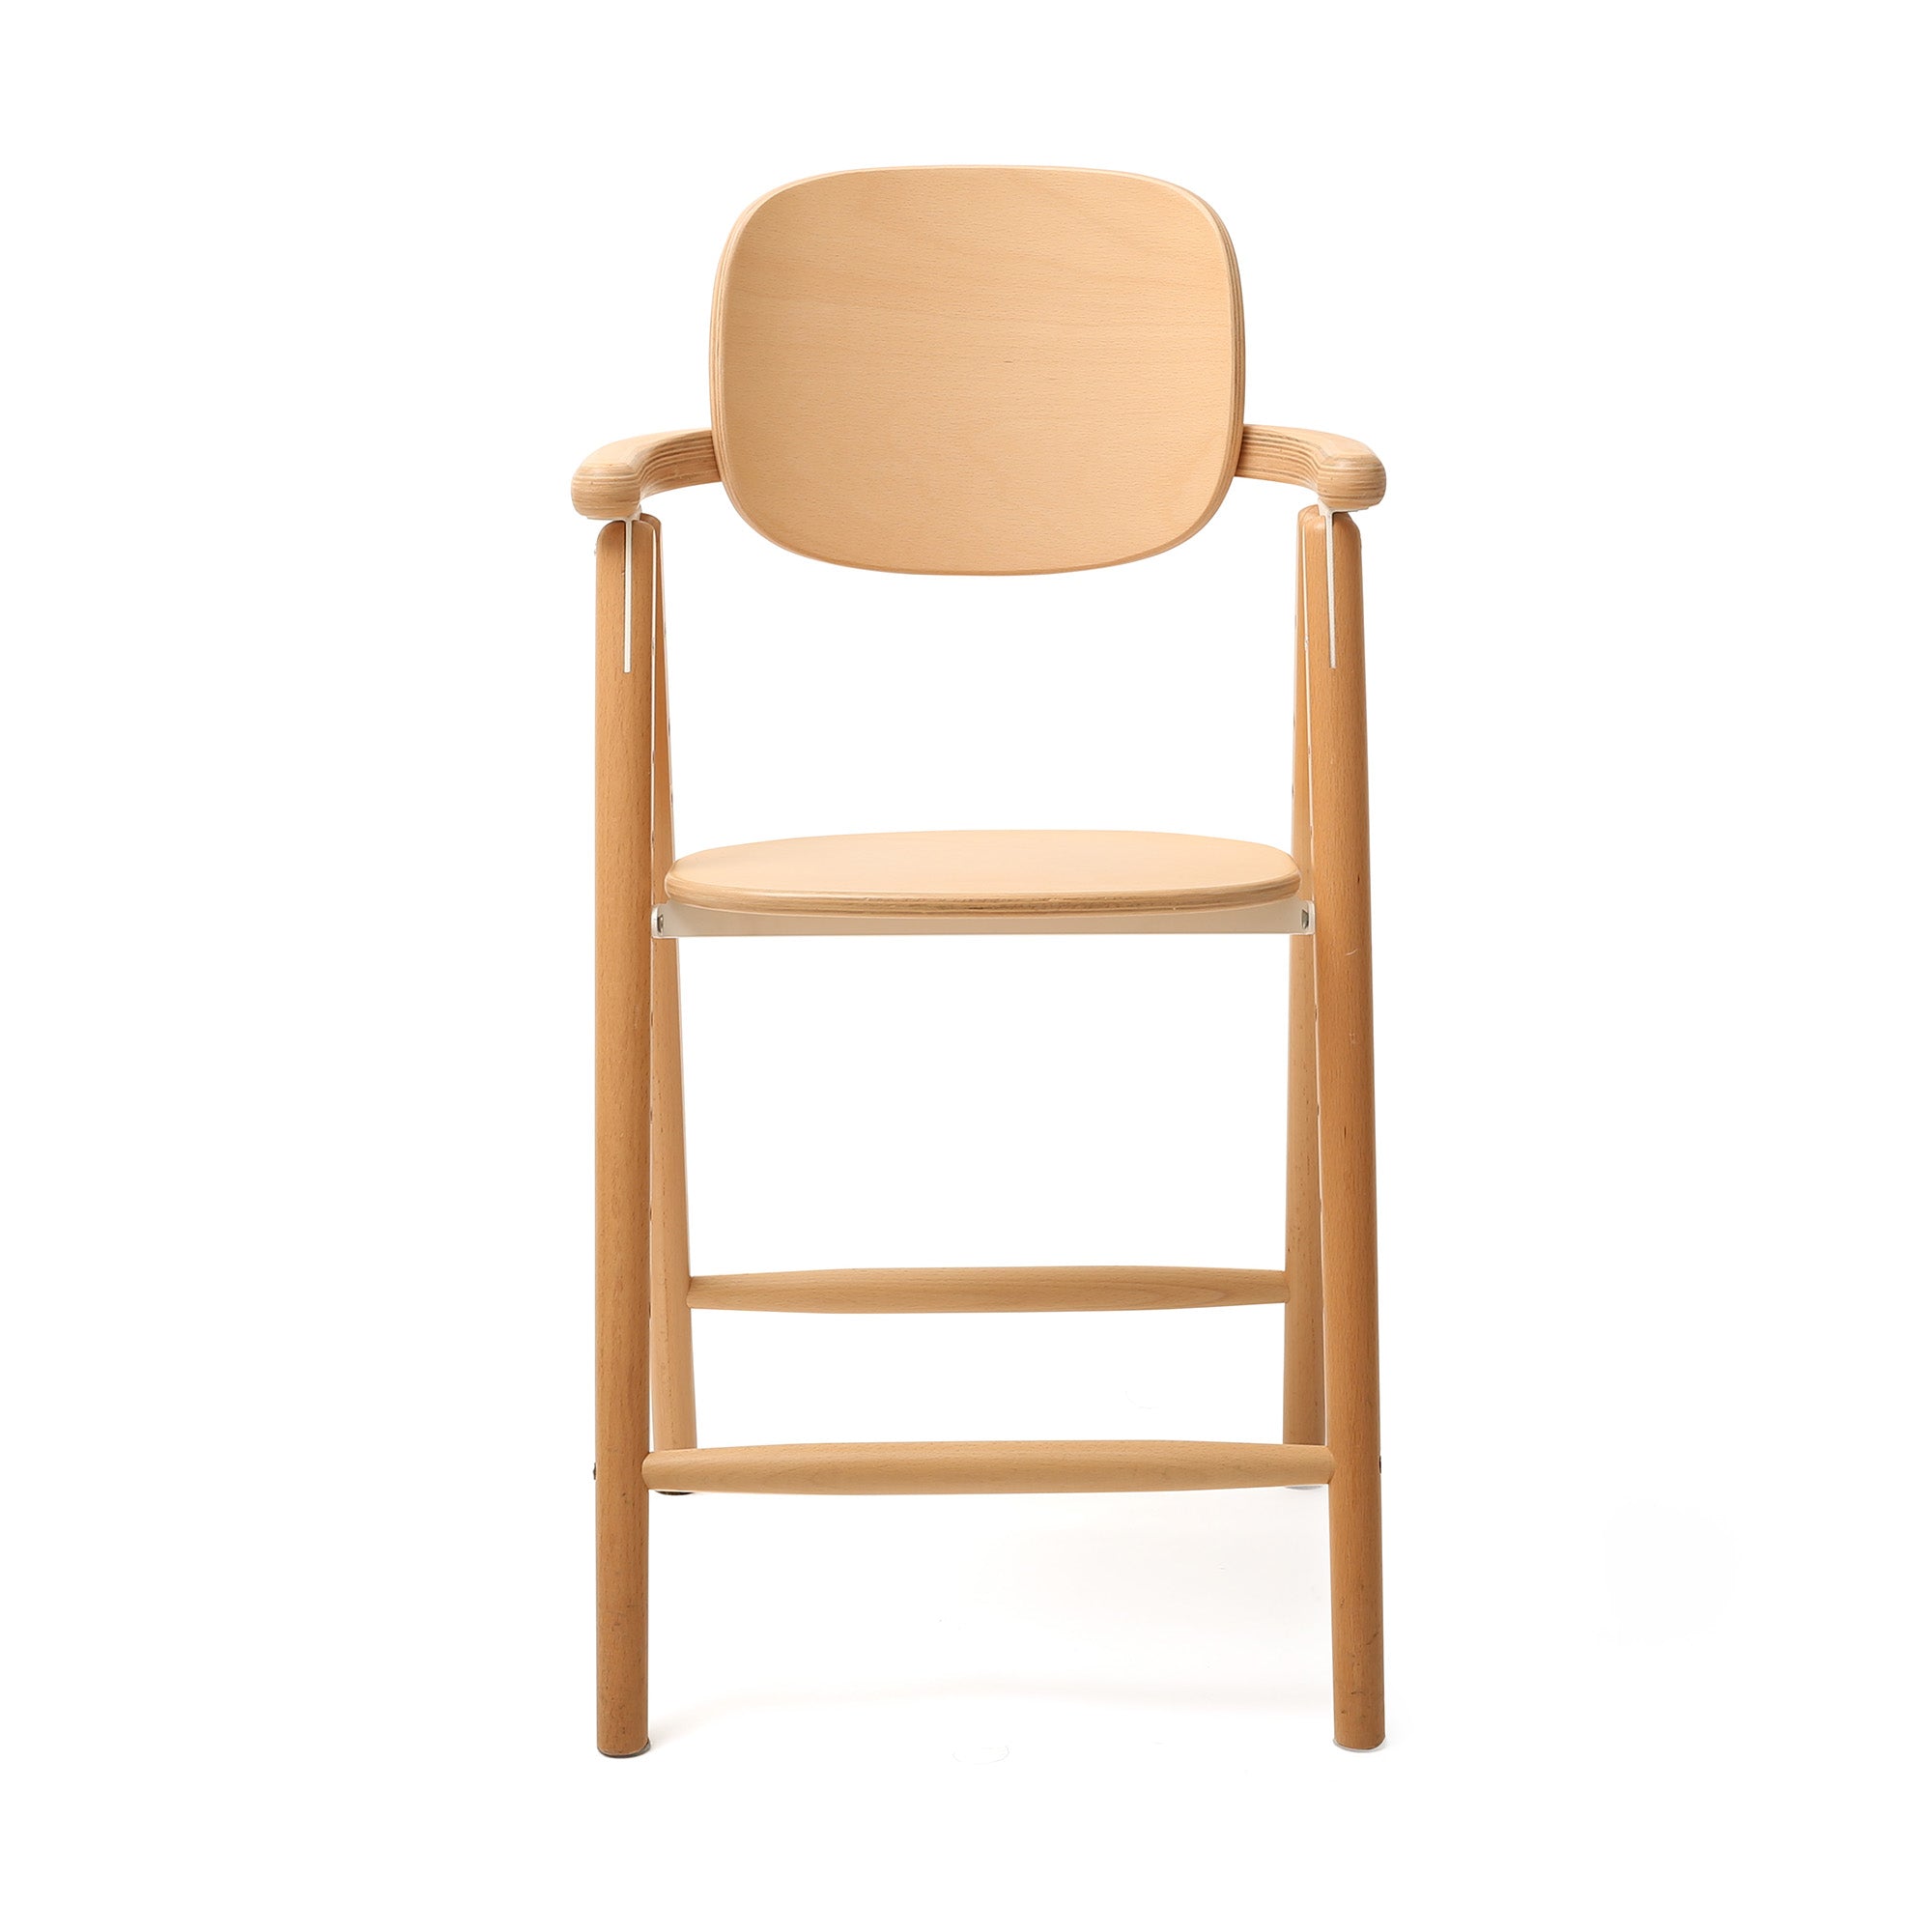 TOBO Evolutionary Chair